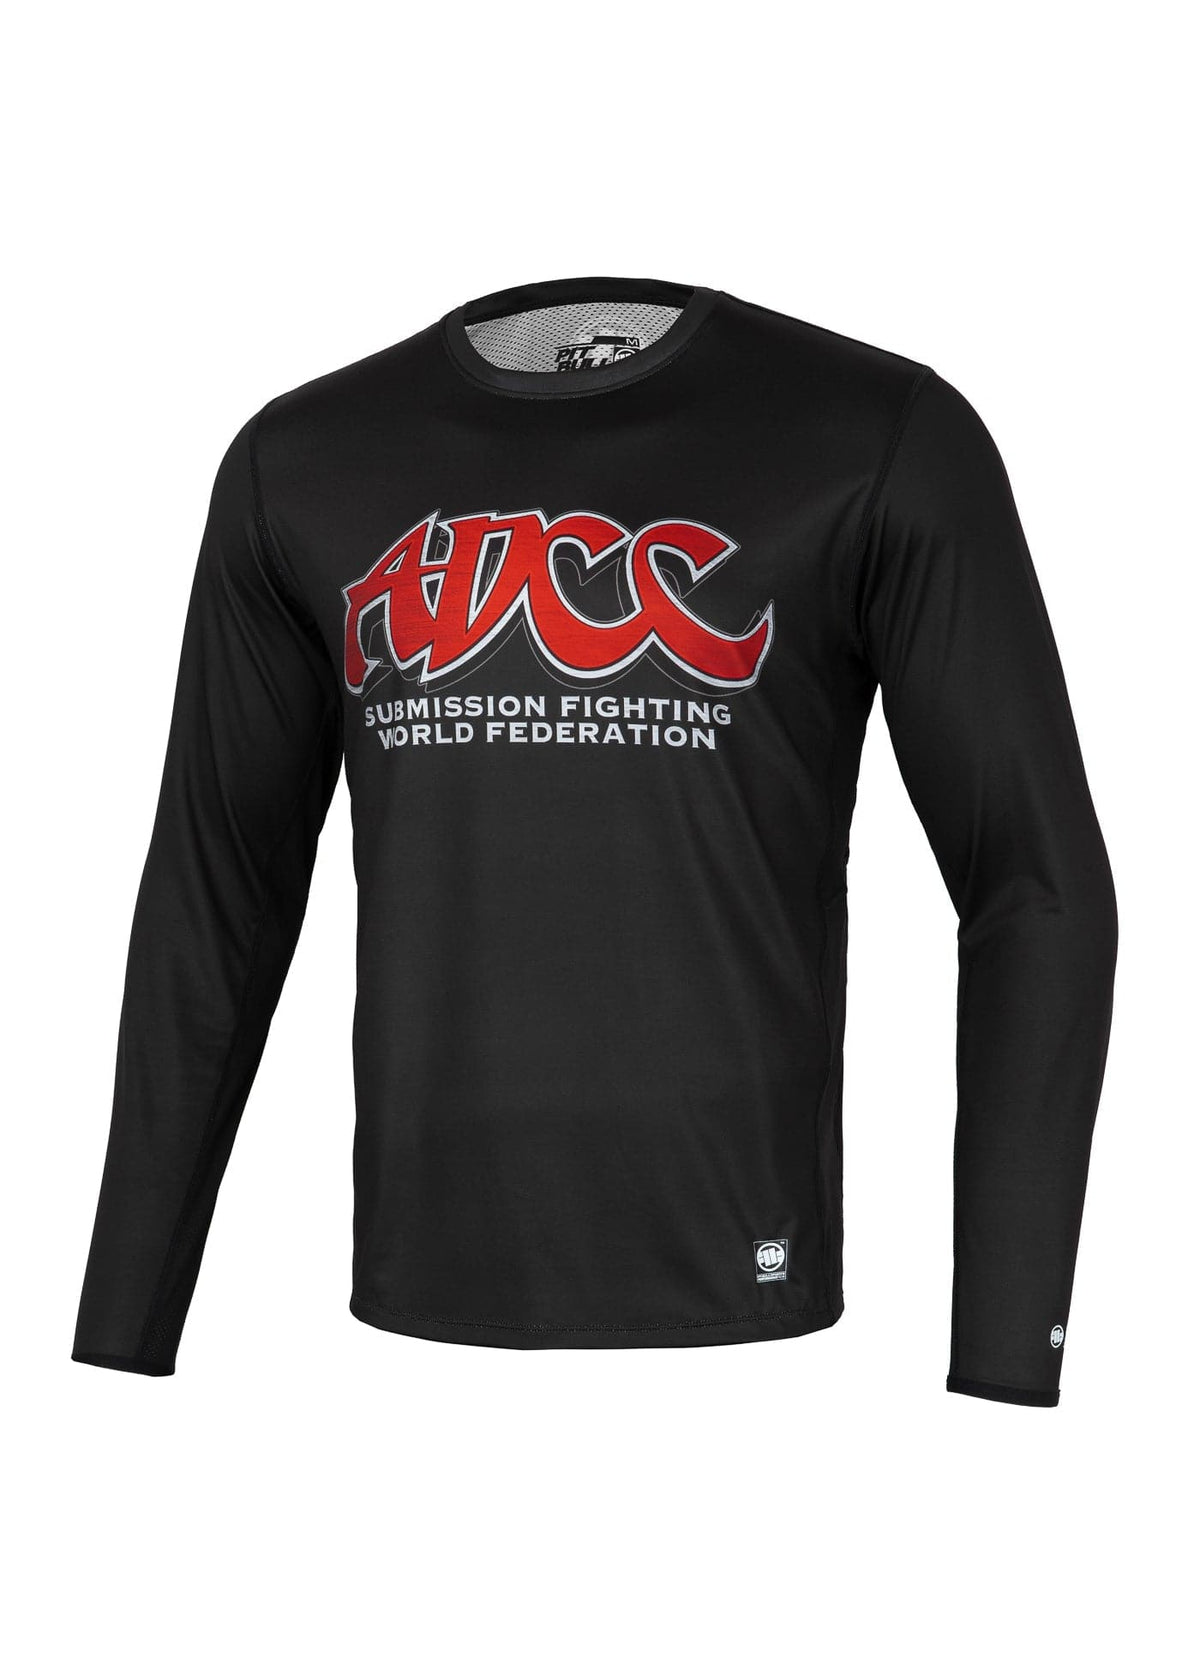 ADCC 2 Black Mesh Longsleeve T-shirt - Pitbull West Coast International Store 